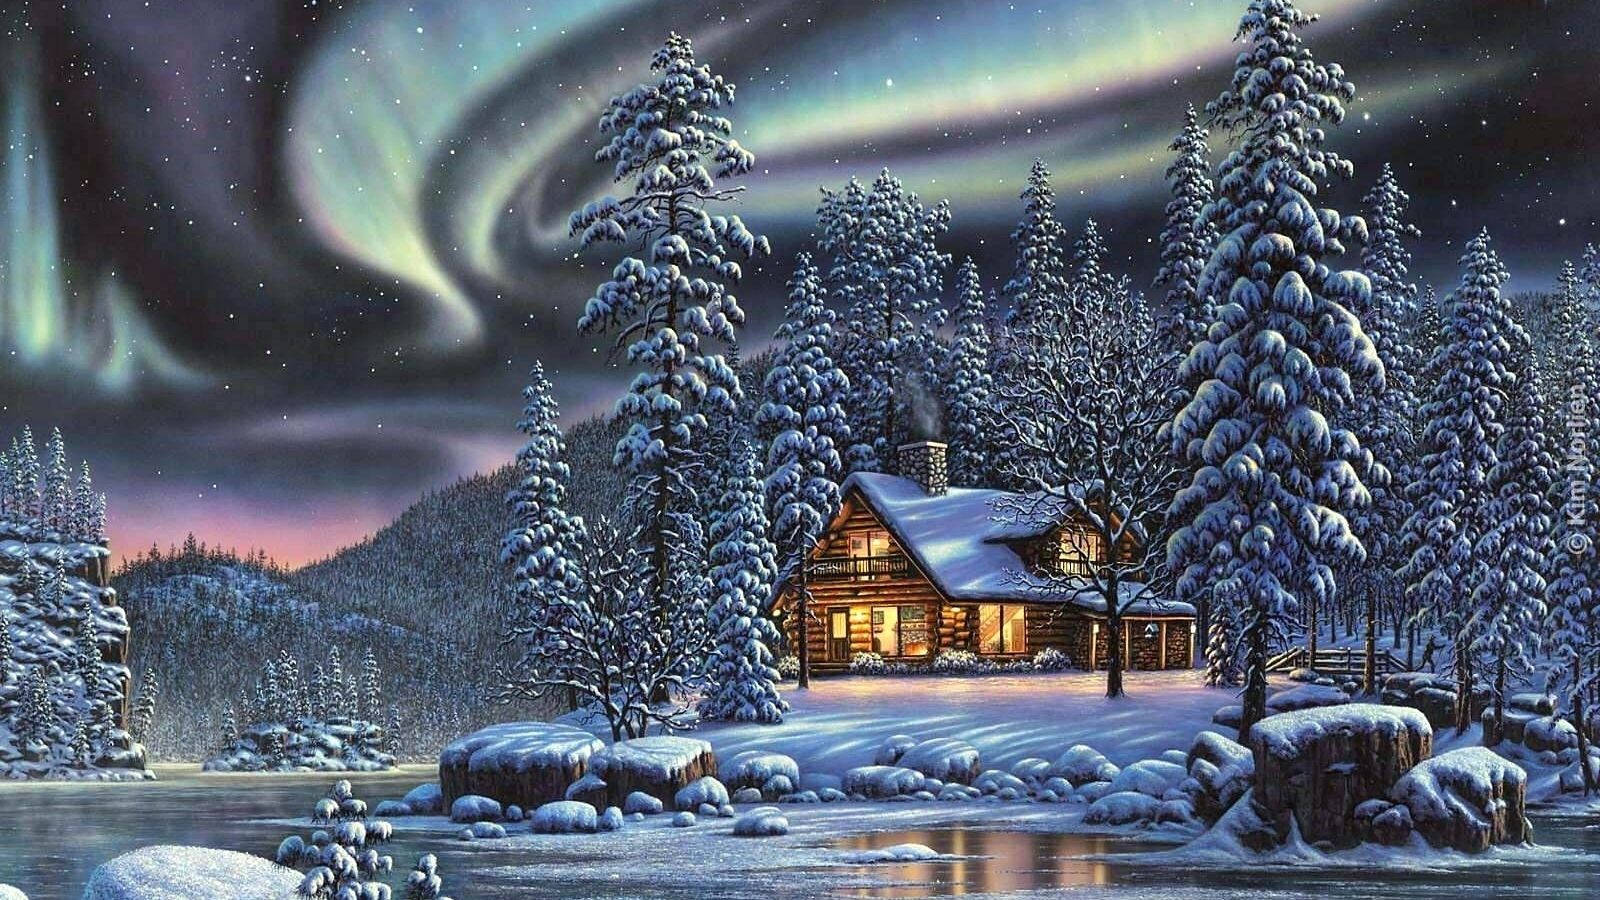 Northern Lights Winter Landscape Wallpaper